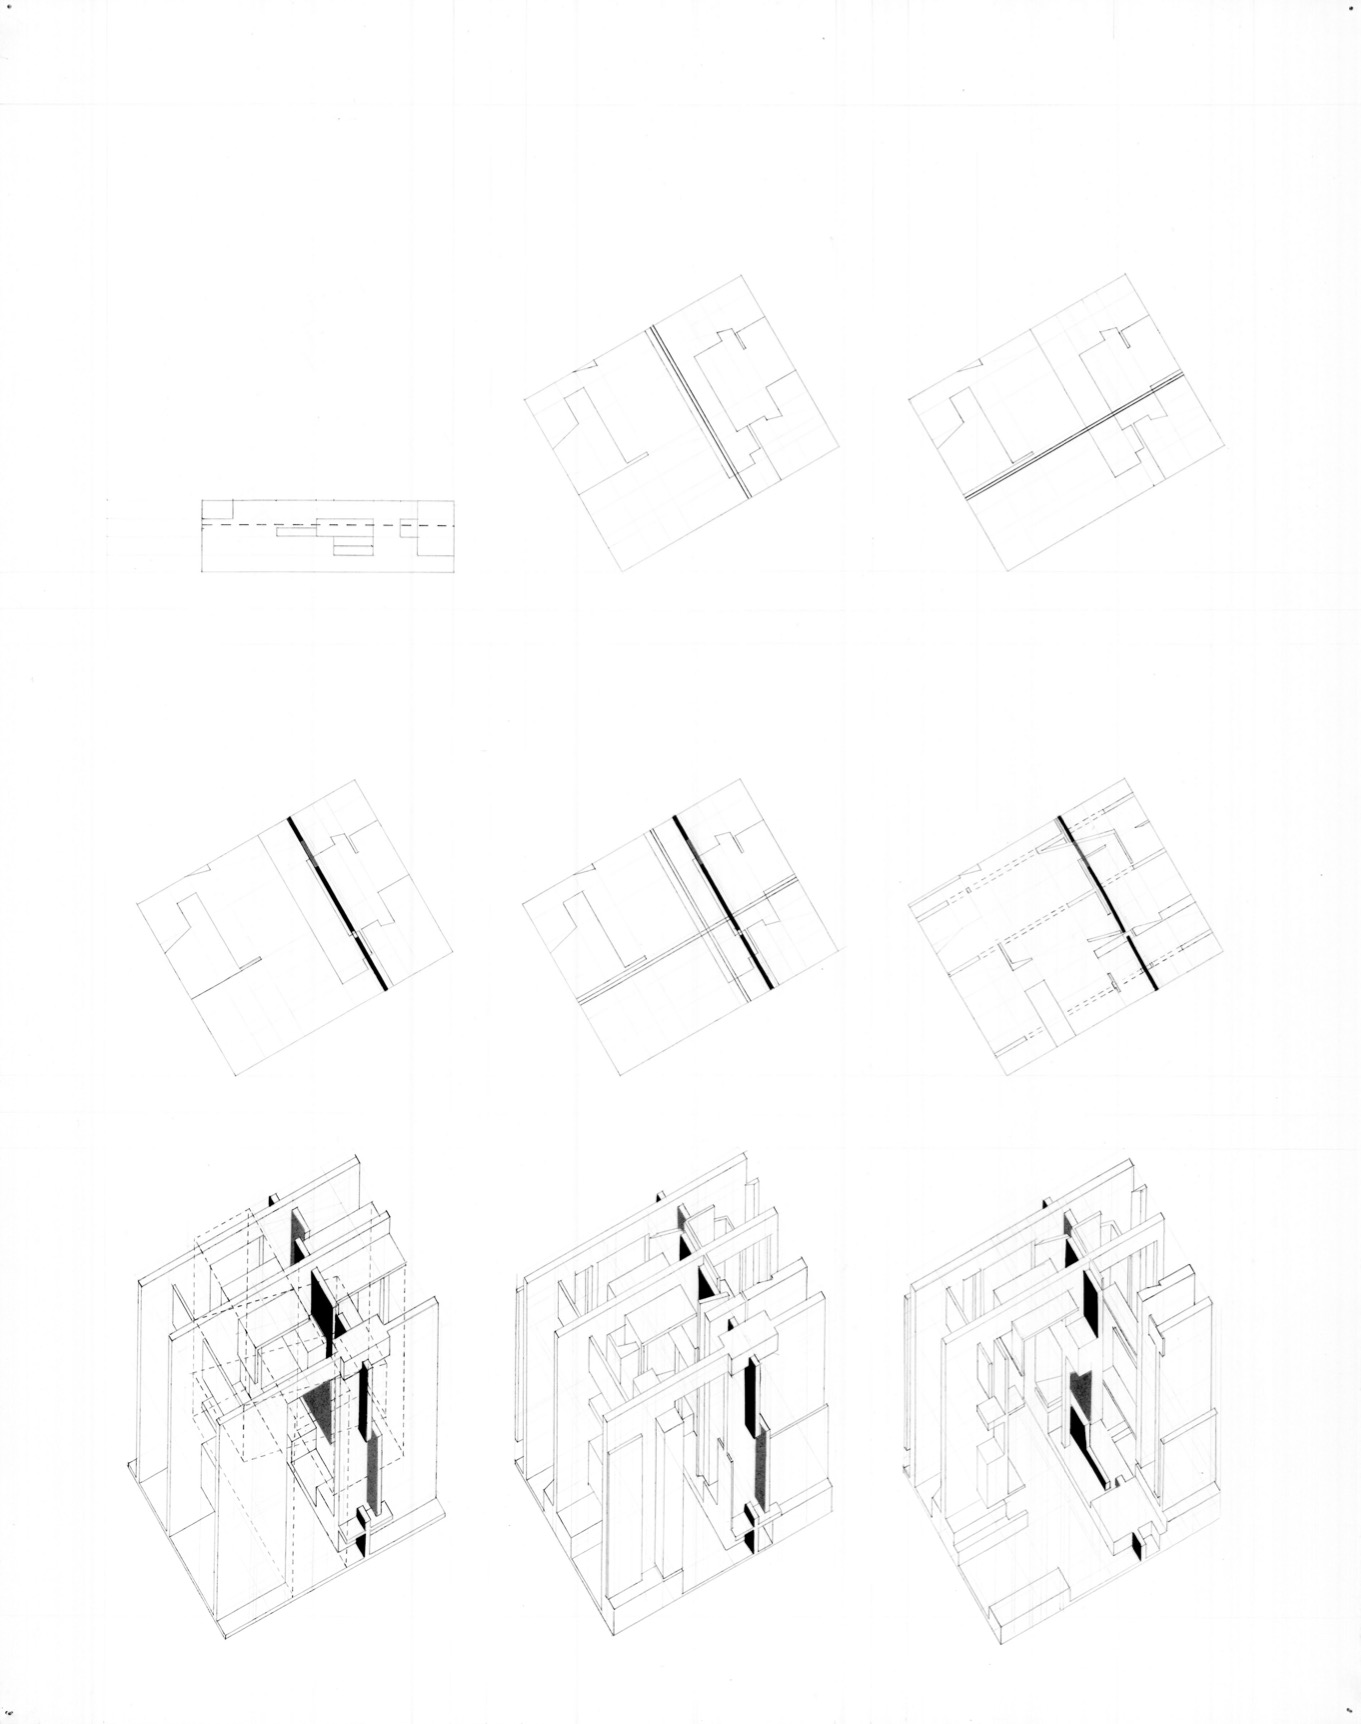 nine pencil drawings illustrating process of creating volume